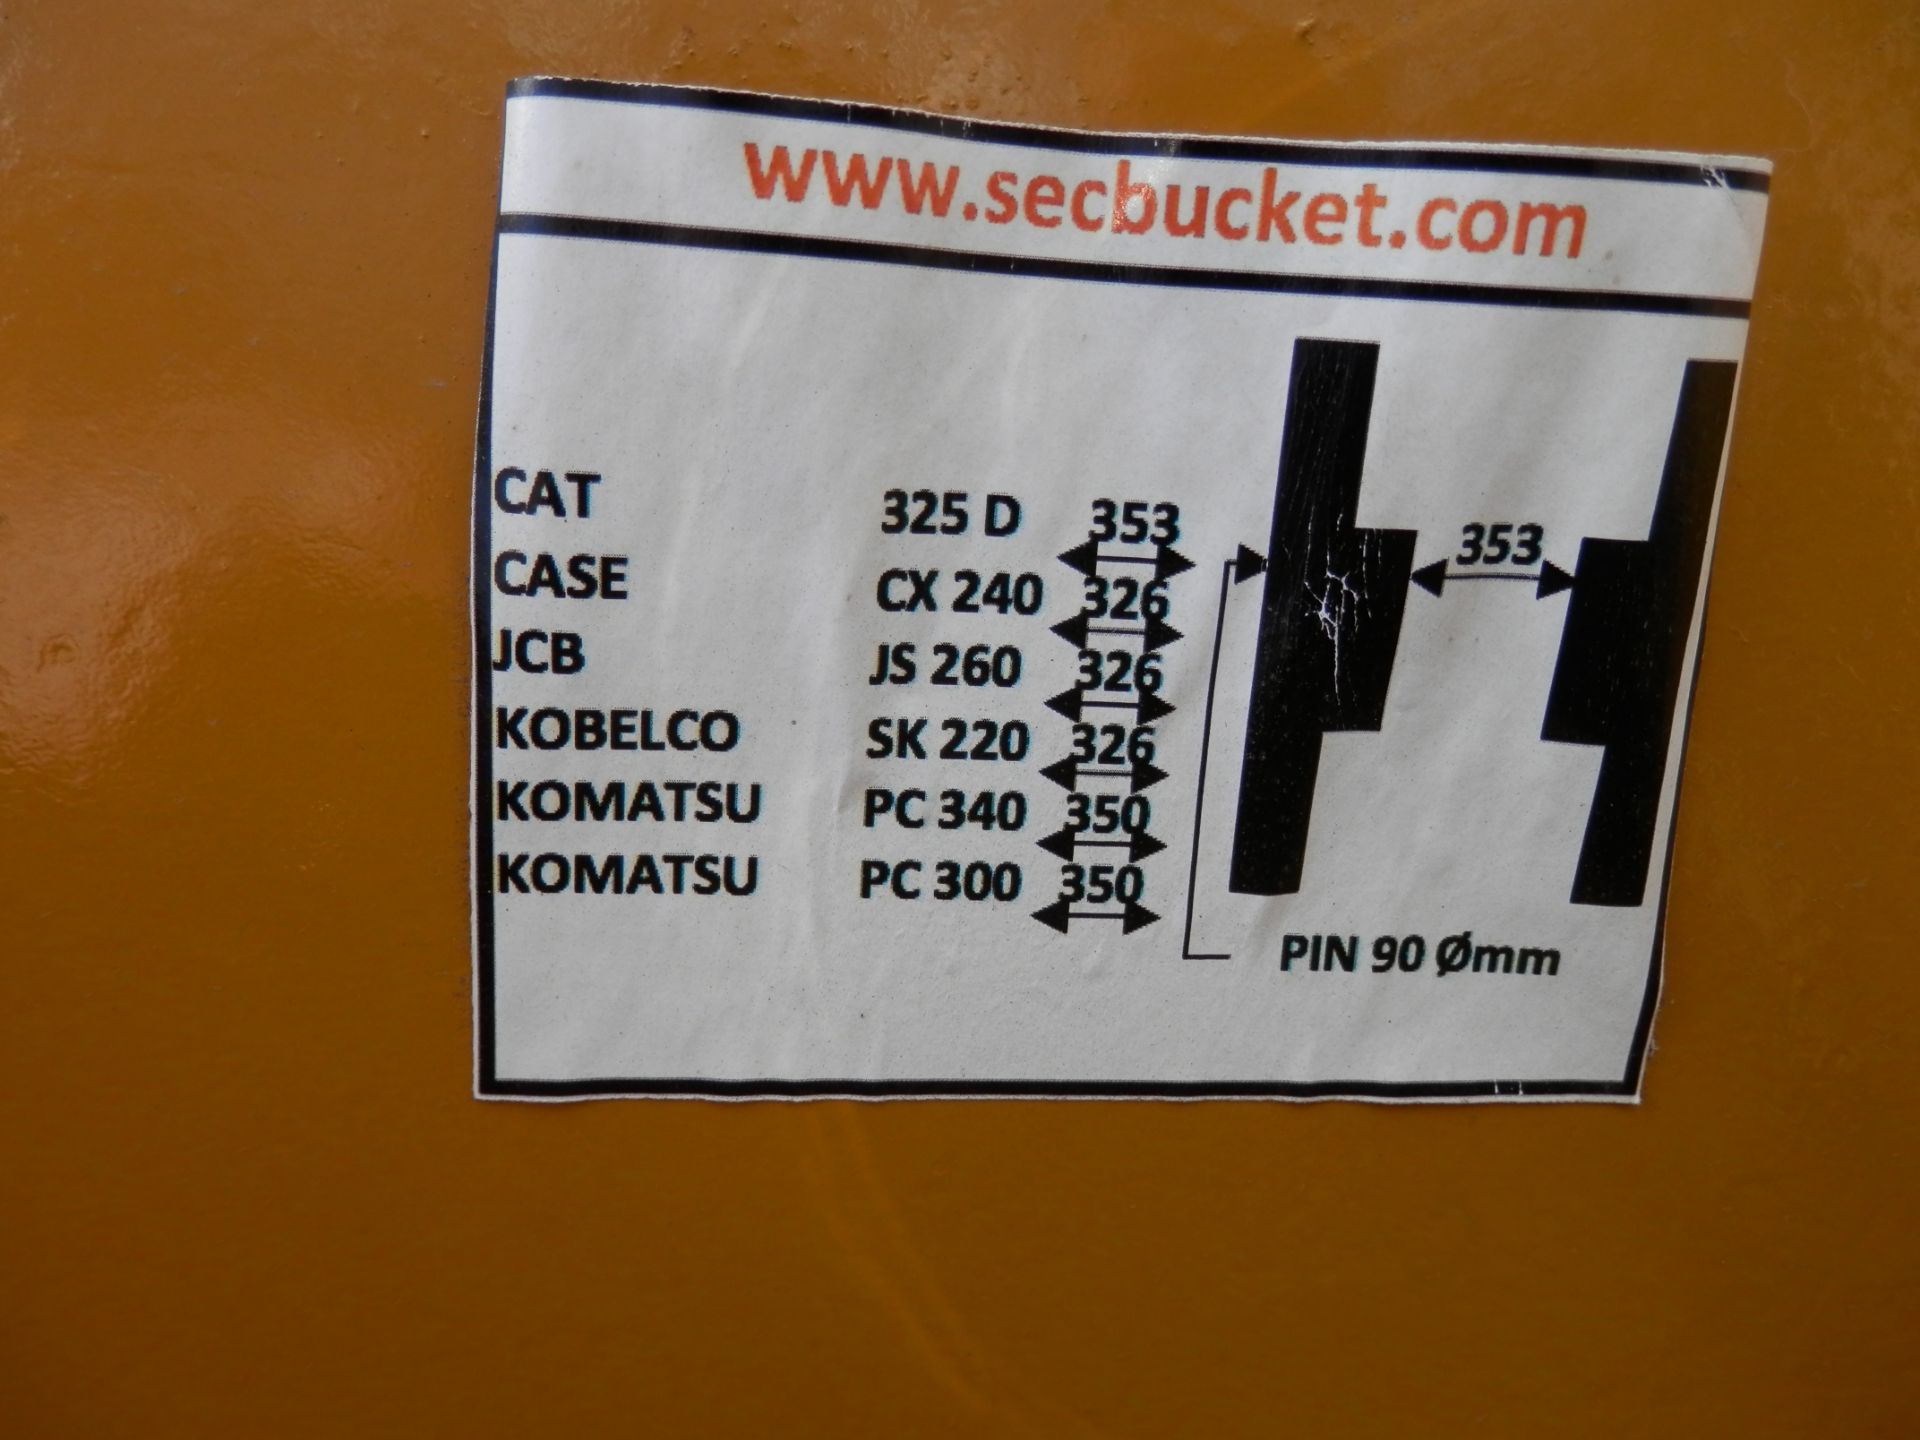 NEW UNUSED RIDDLE BUCKET 90MM PIN, 353. TO FIT CAT 325D, KOMATSU PC300/340, JCB JS260 ETC. - Image 2 of 4